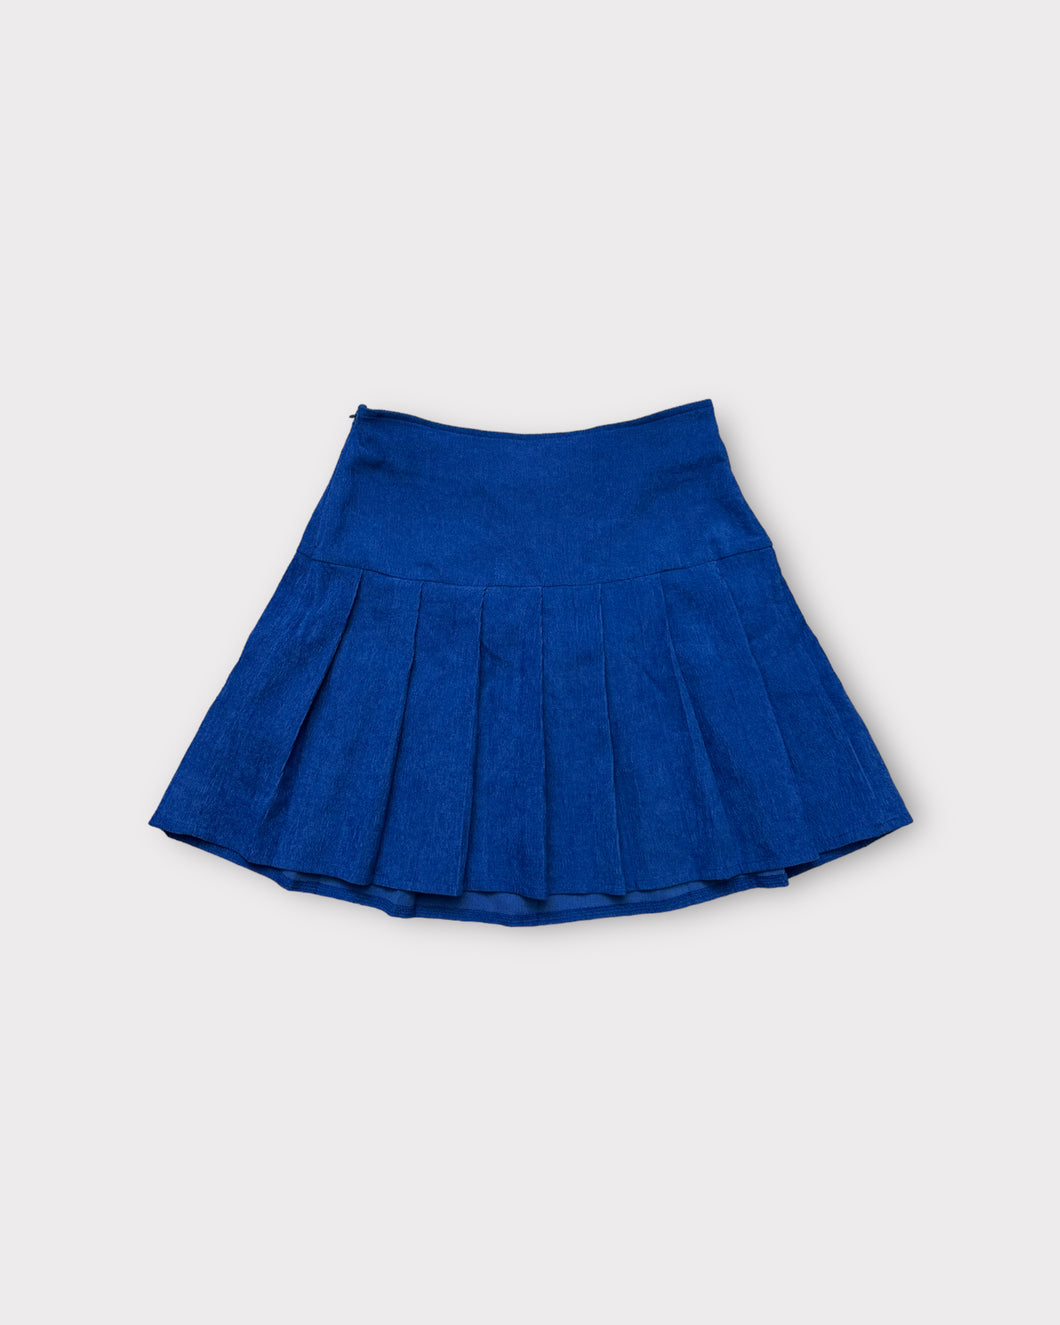 Cider Blue High Waisted Pleated Mini Skirt (S)